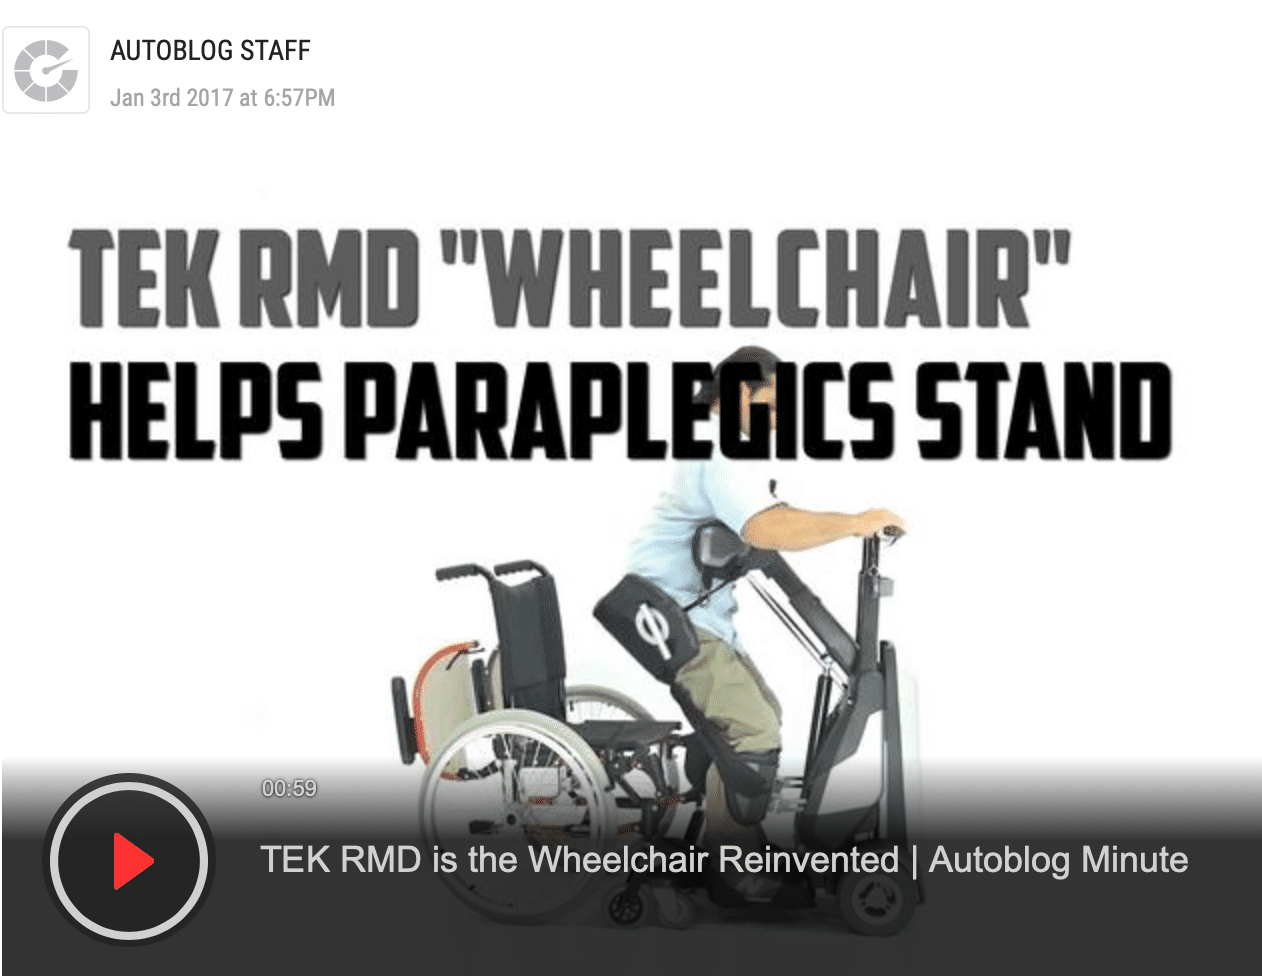 TEK RMD is the Wheelchair Reinvented | Autoblog Minute